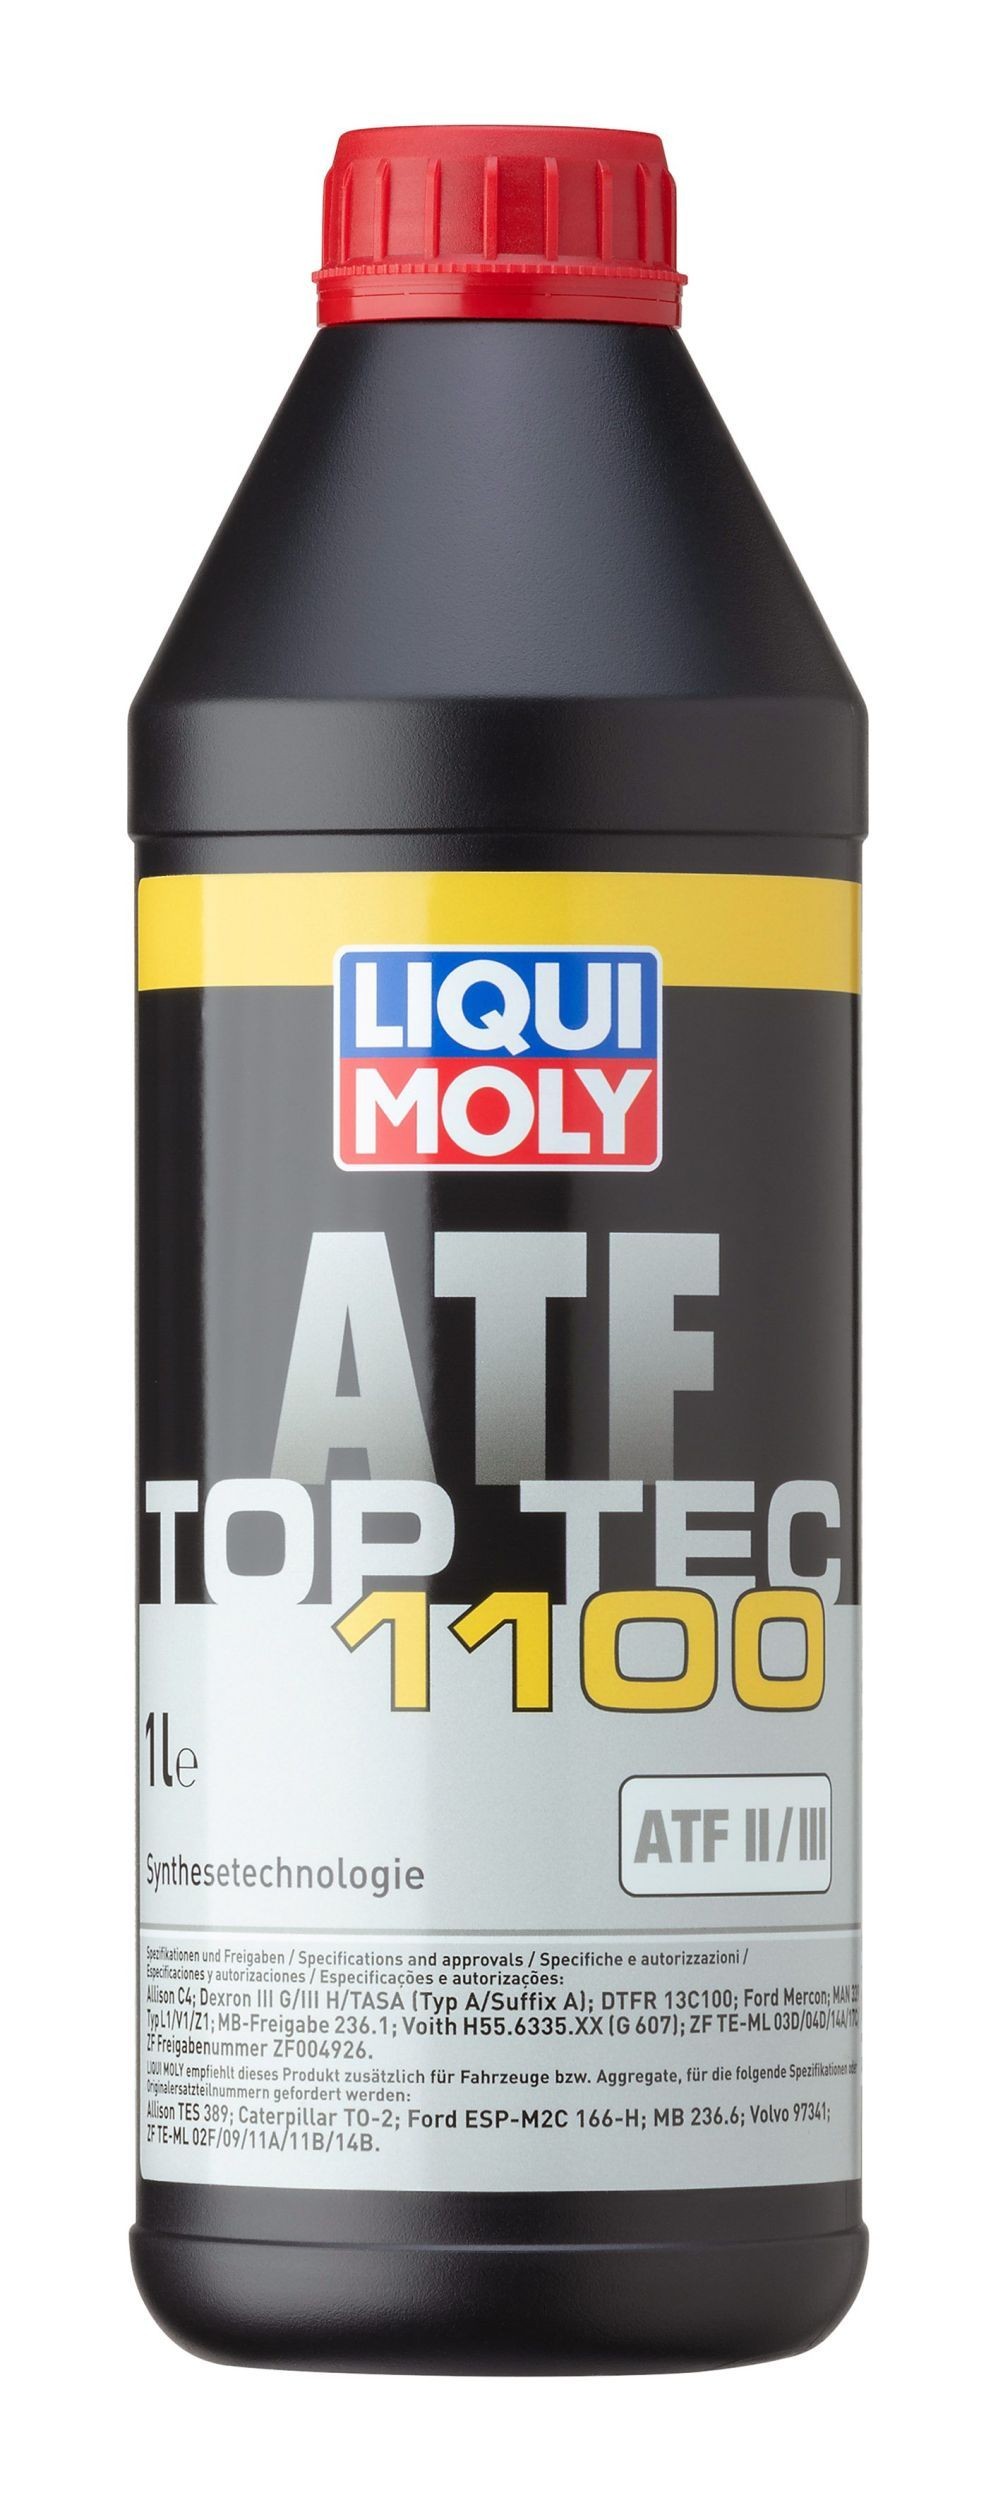 LIQUI MOLY Top Tec ATF, 1100 3651 Automatic transmission fluid ATF III, 1l, red